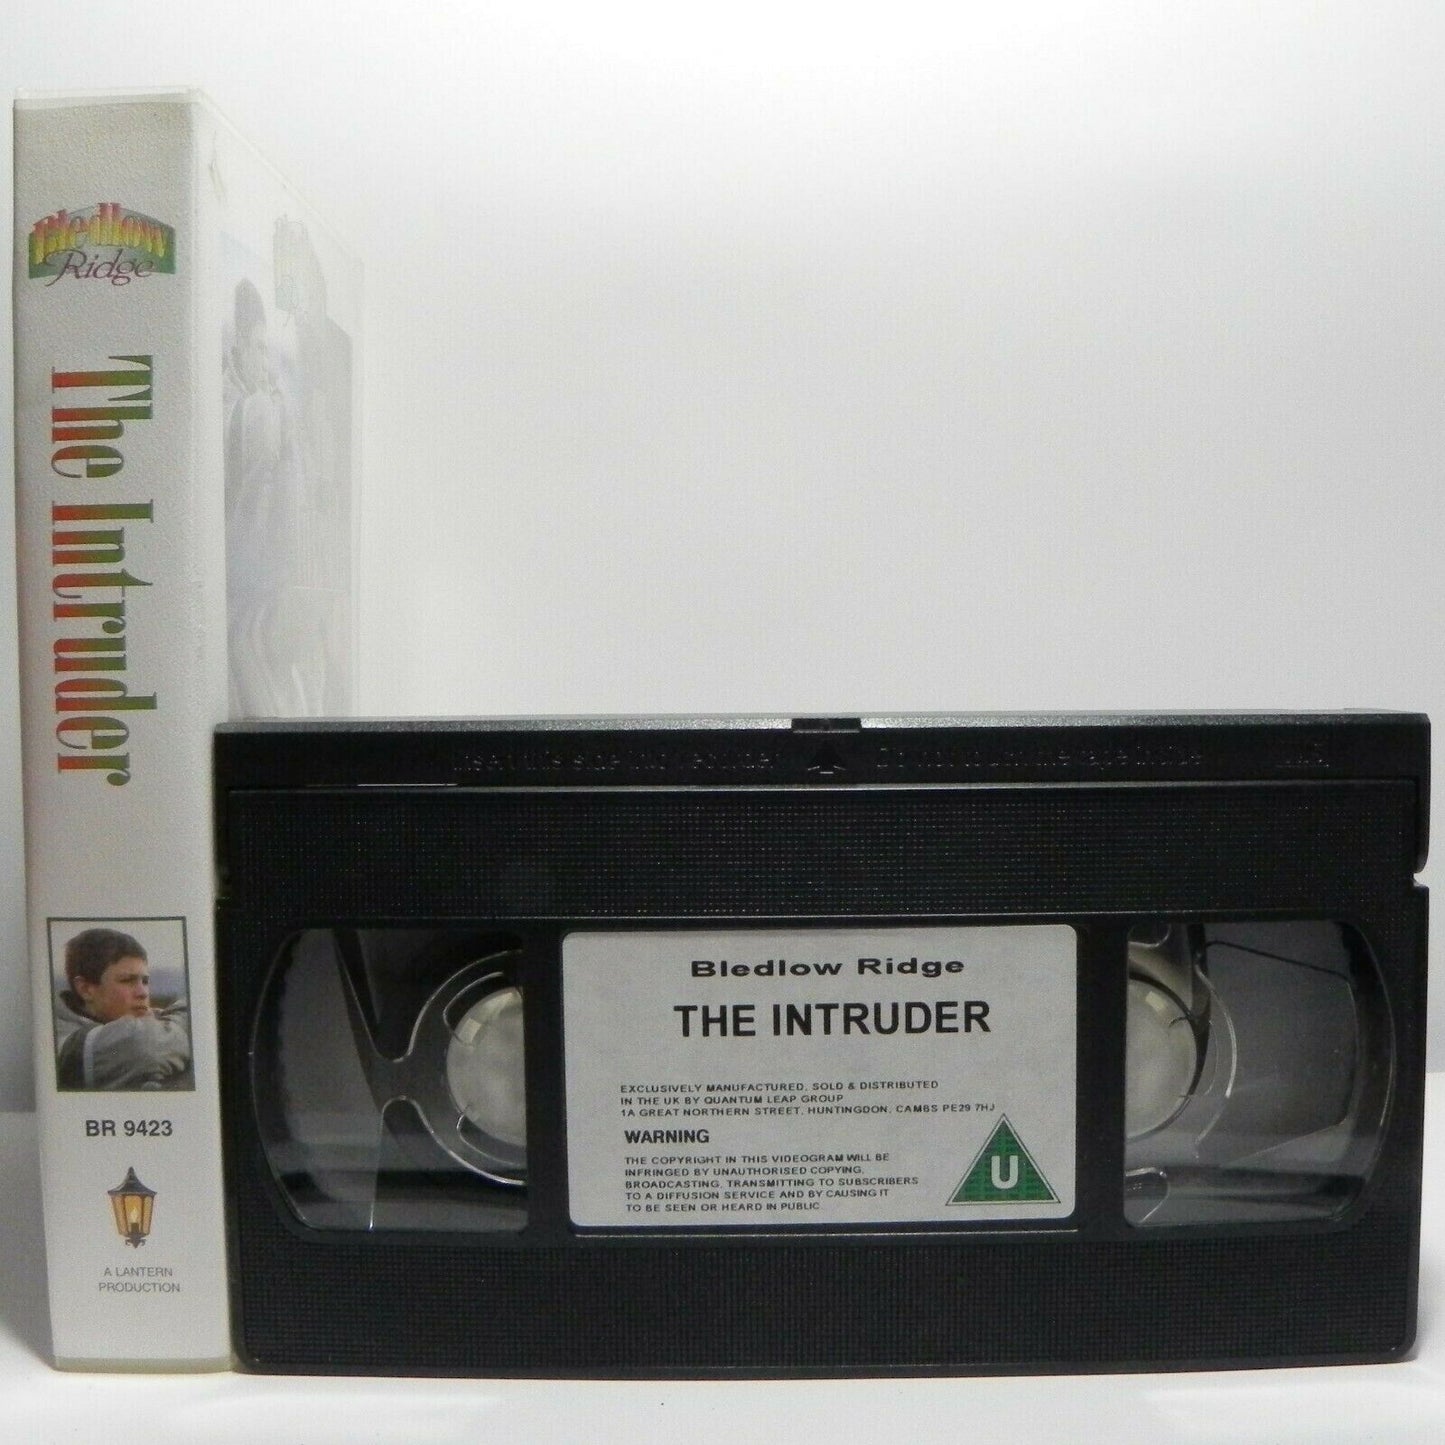 The Intruder: Paul Jones/Graham Fulford - (1995) Family Movie - Pal VHS-